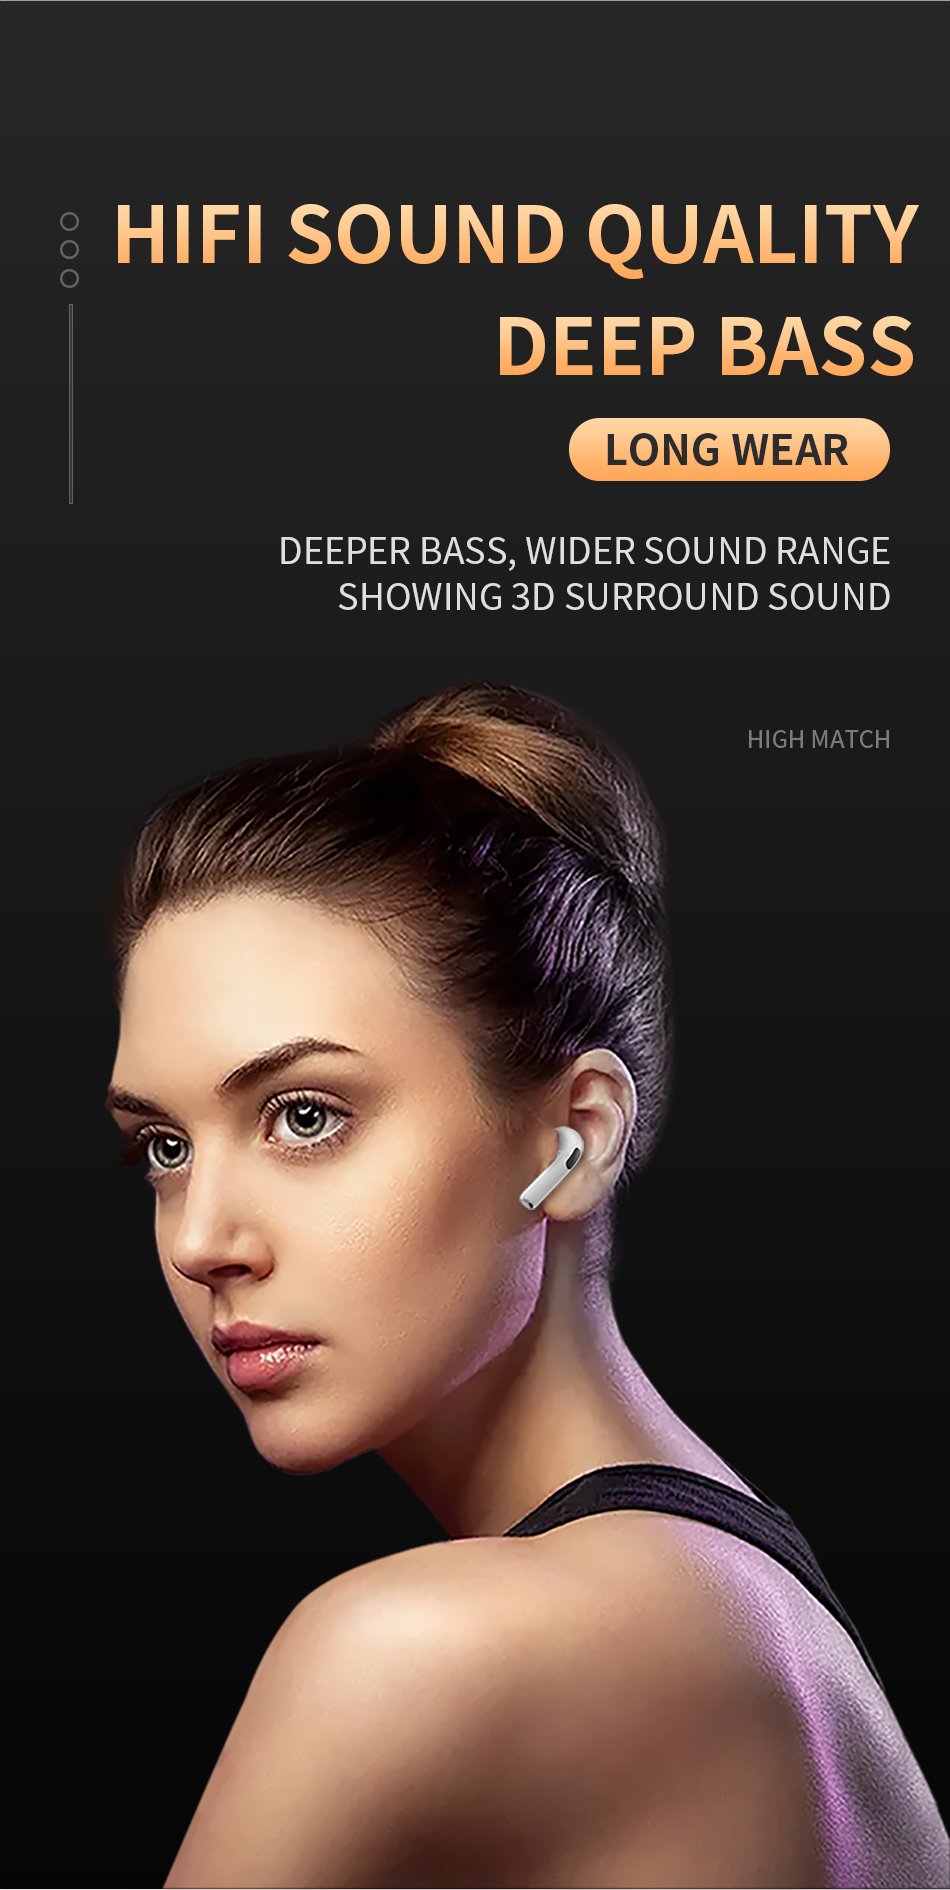 Original Air Pro 6 TWS Wireless Bluetooth Earphones Mini Pods Earbuds Earpod Headset For Xiaomi Android Apple iPhone Headphones